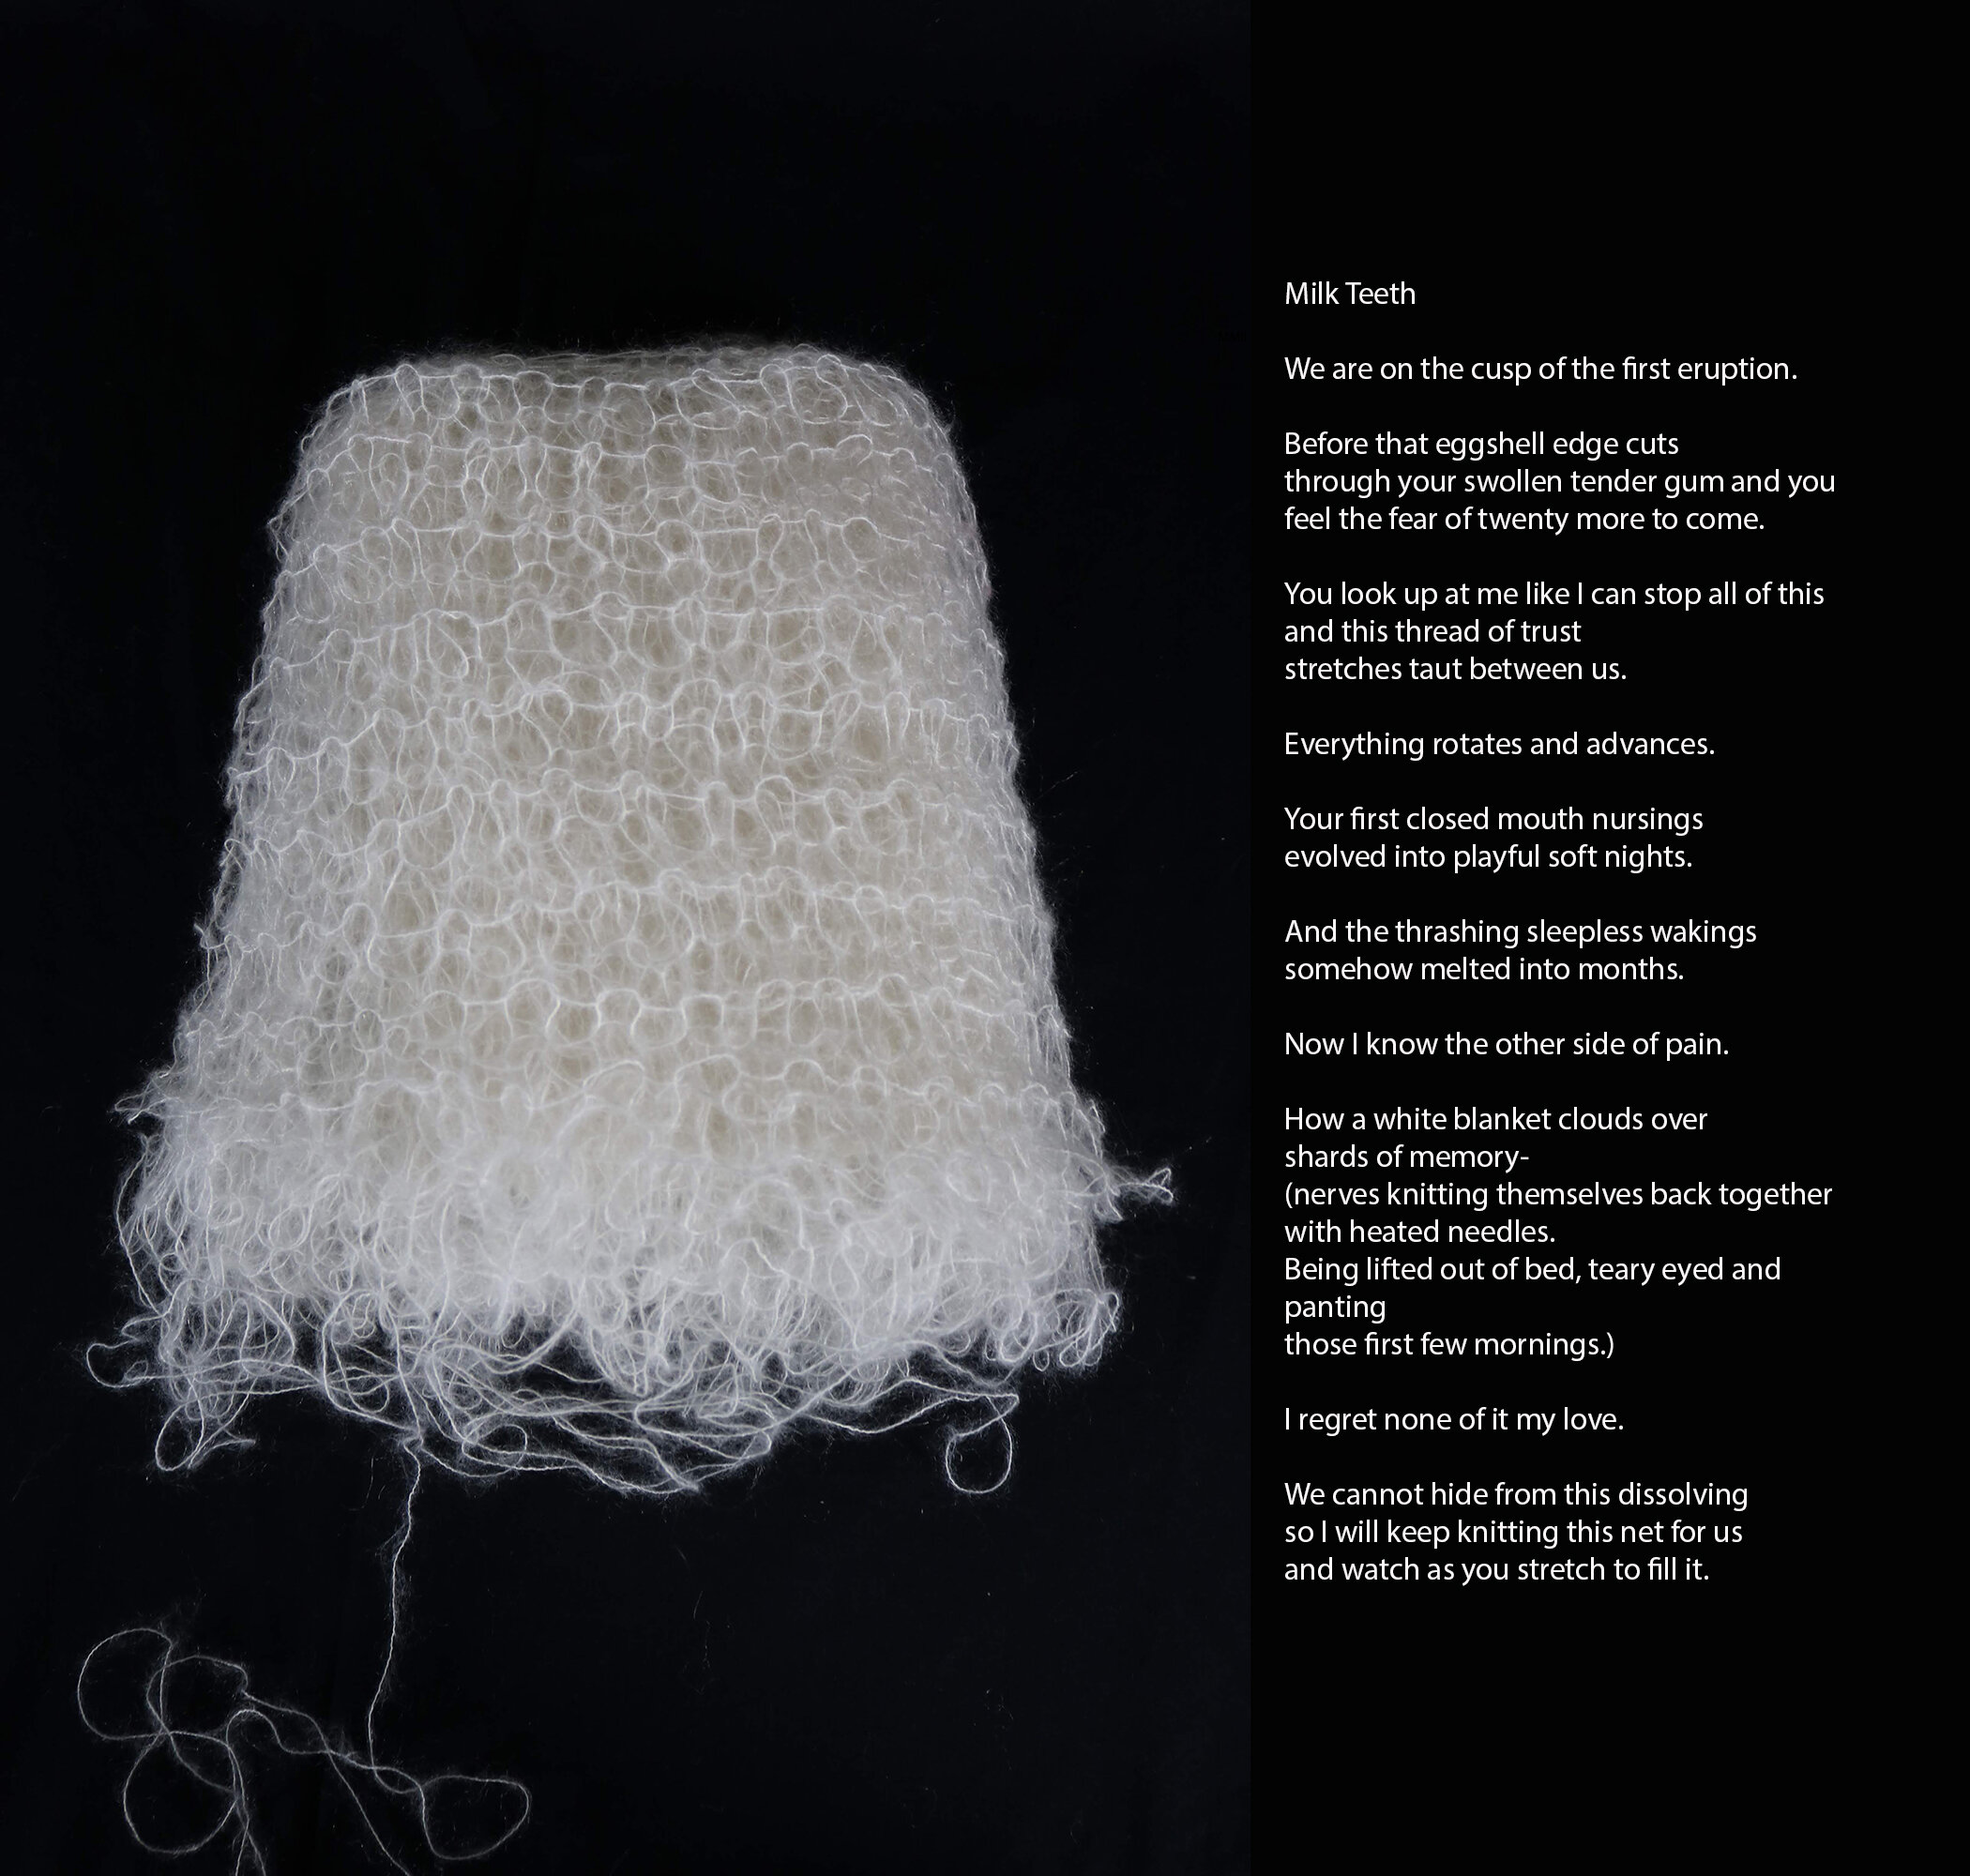   Milk teeth , 2019, handmade kozo paper, transfers, gouache, embroidery, knit wrap, 12”x9”x3” closed. Poem by the artist.     